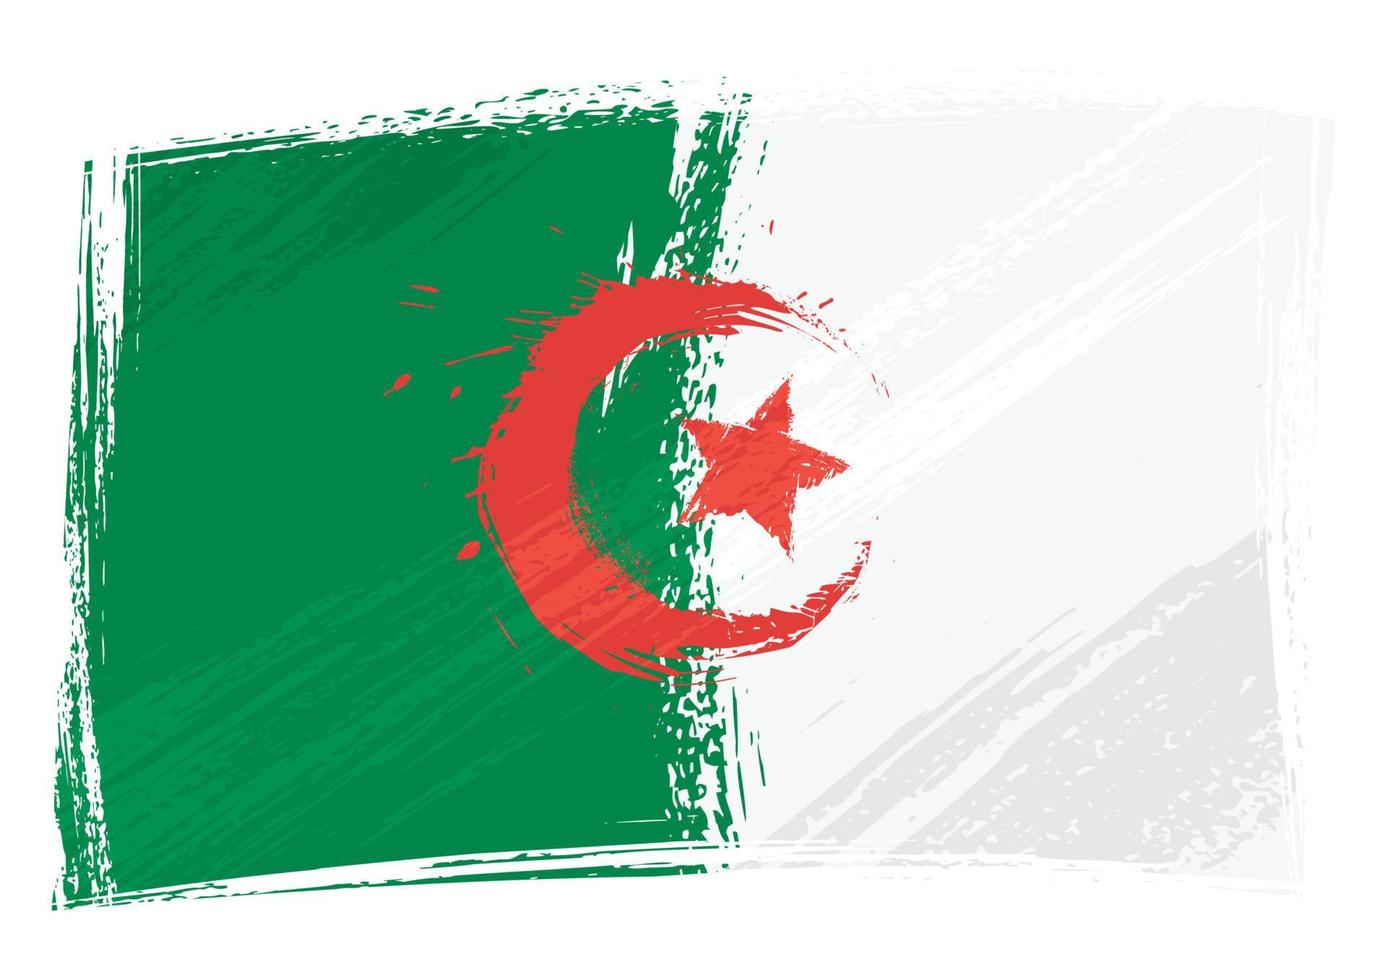 Algeria national flag created in grunge style vector